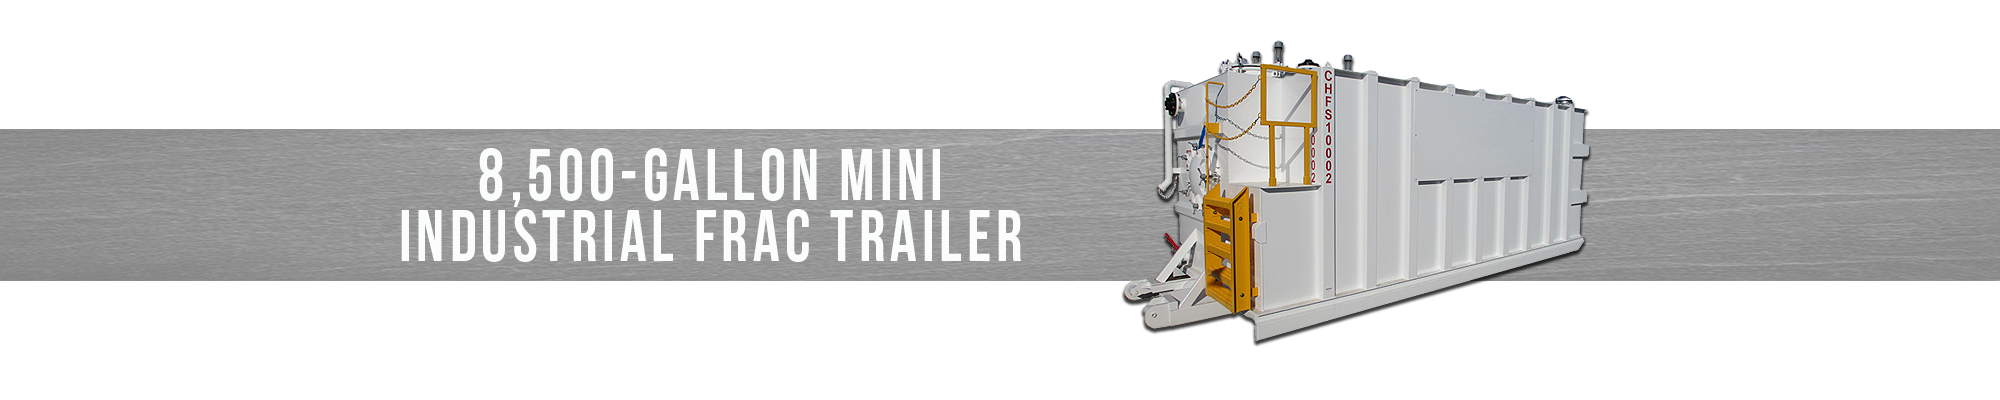 8,500-Gallon Mini Industrial Frac Trailer